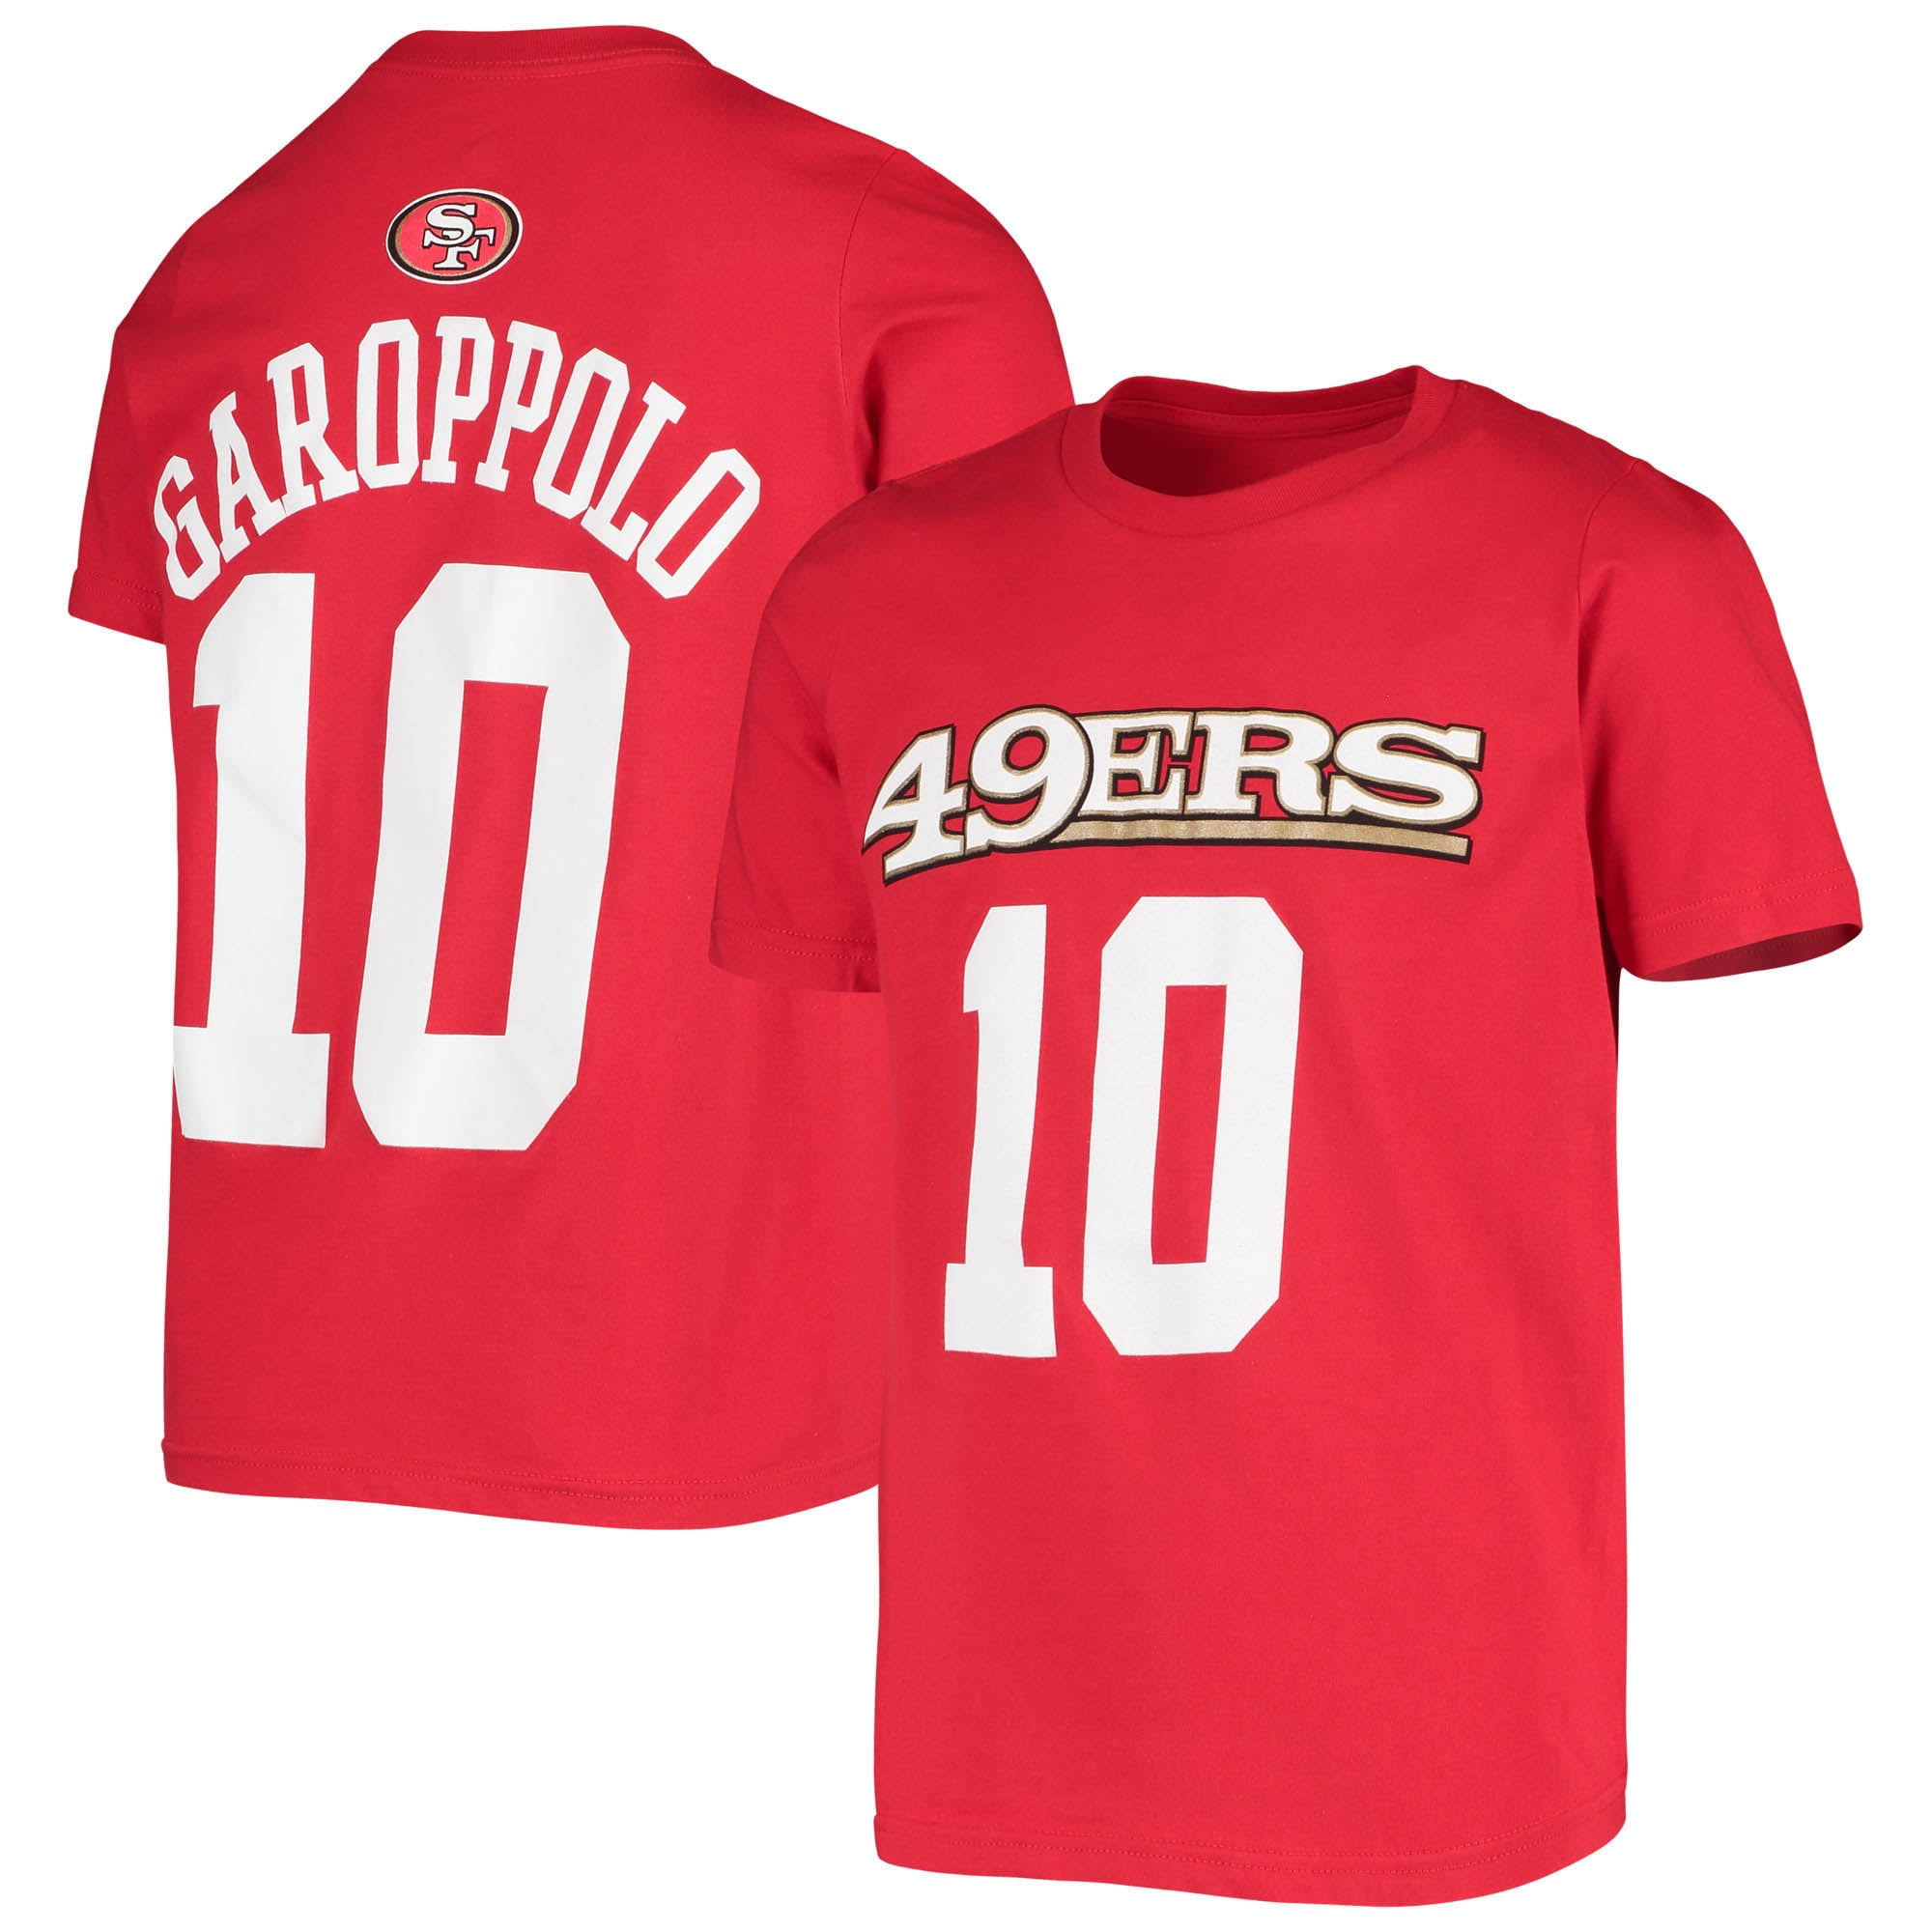 Mens Jersey # 10 Garoppolo # 80 Rice # 85 Kittle 49ers Salut to Service Mesh Football Jerseys T Shirts Sportswear Vests Sleevless Tops 